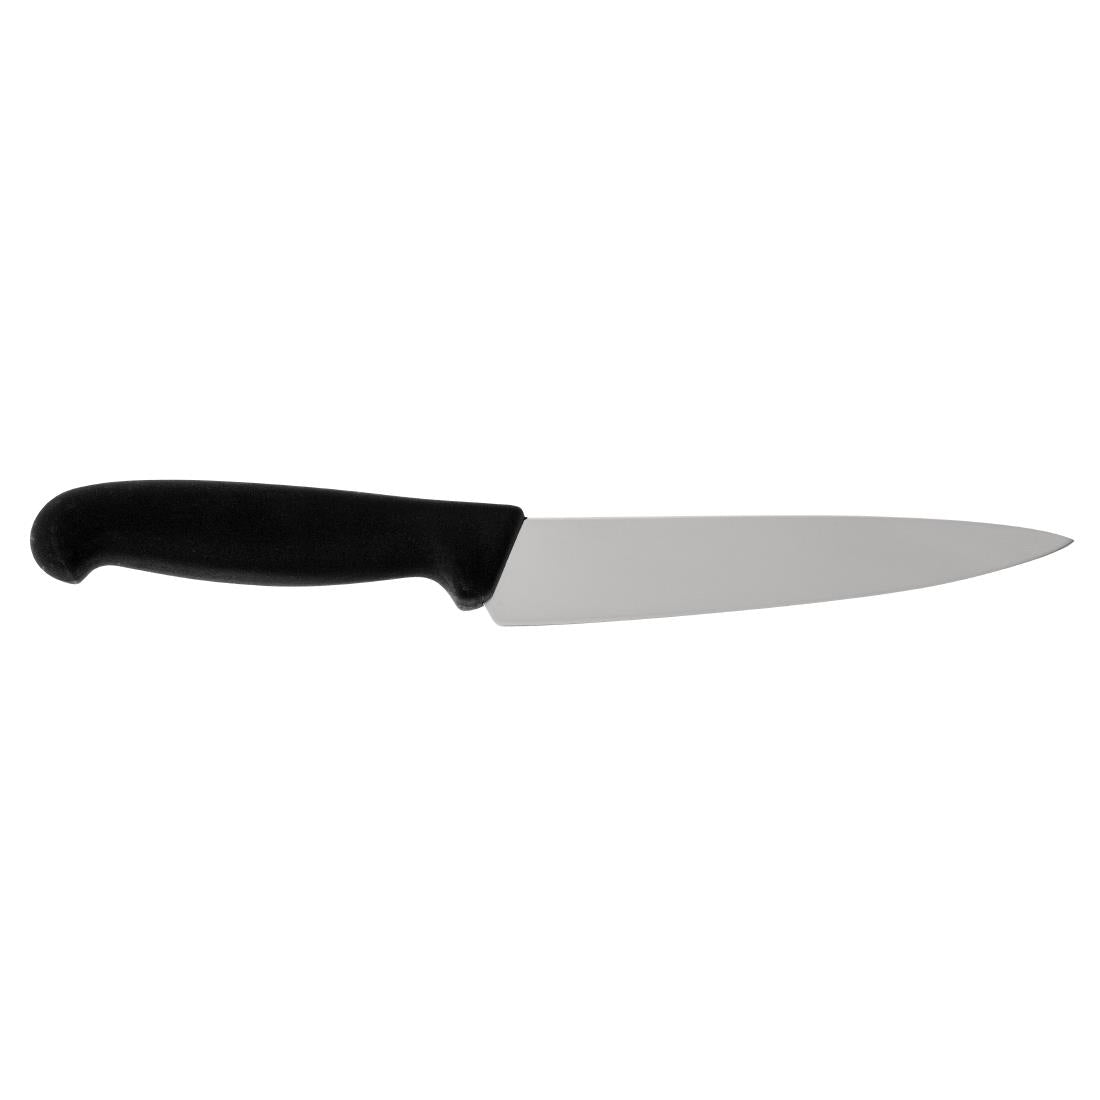 C659 Victorinox Fibrox Chef Knife 15cm